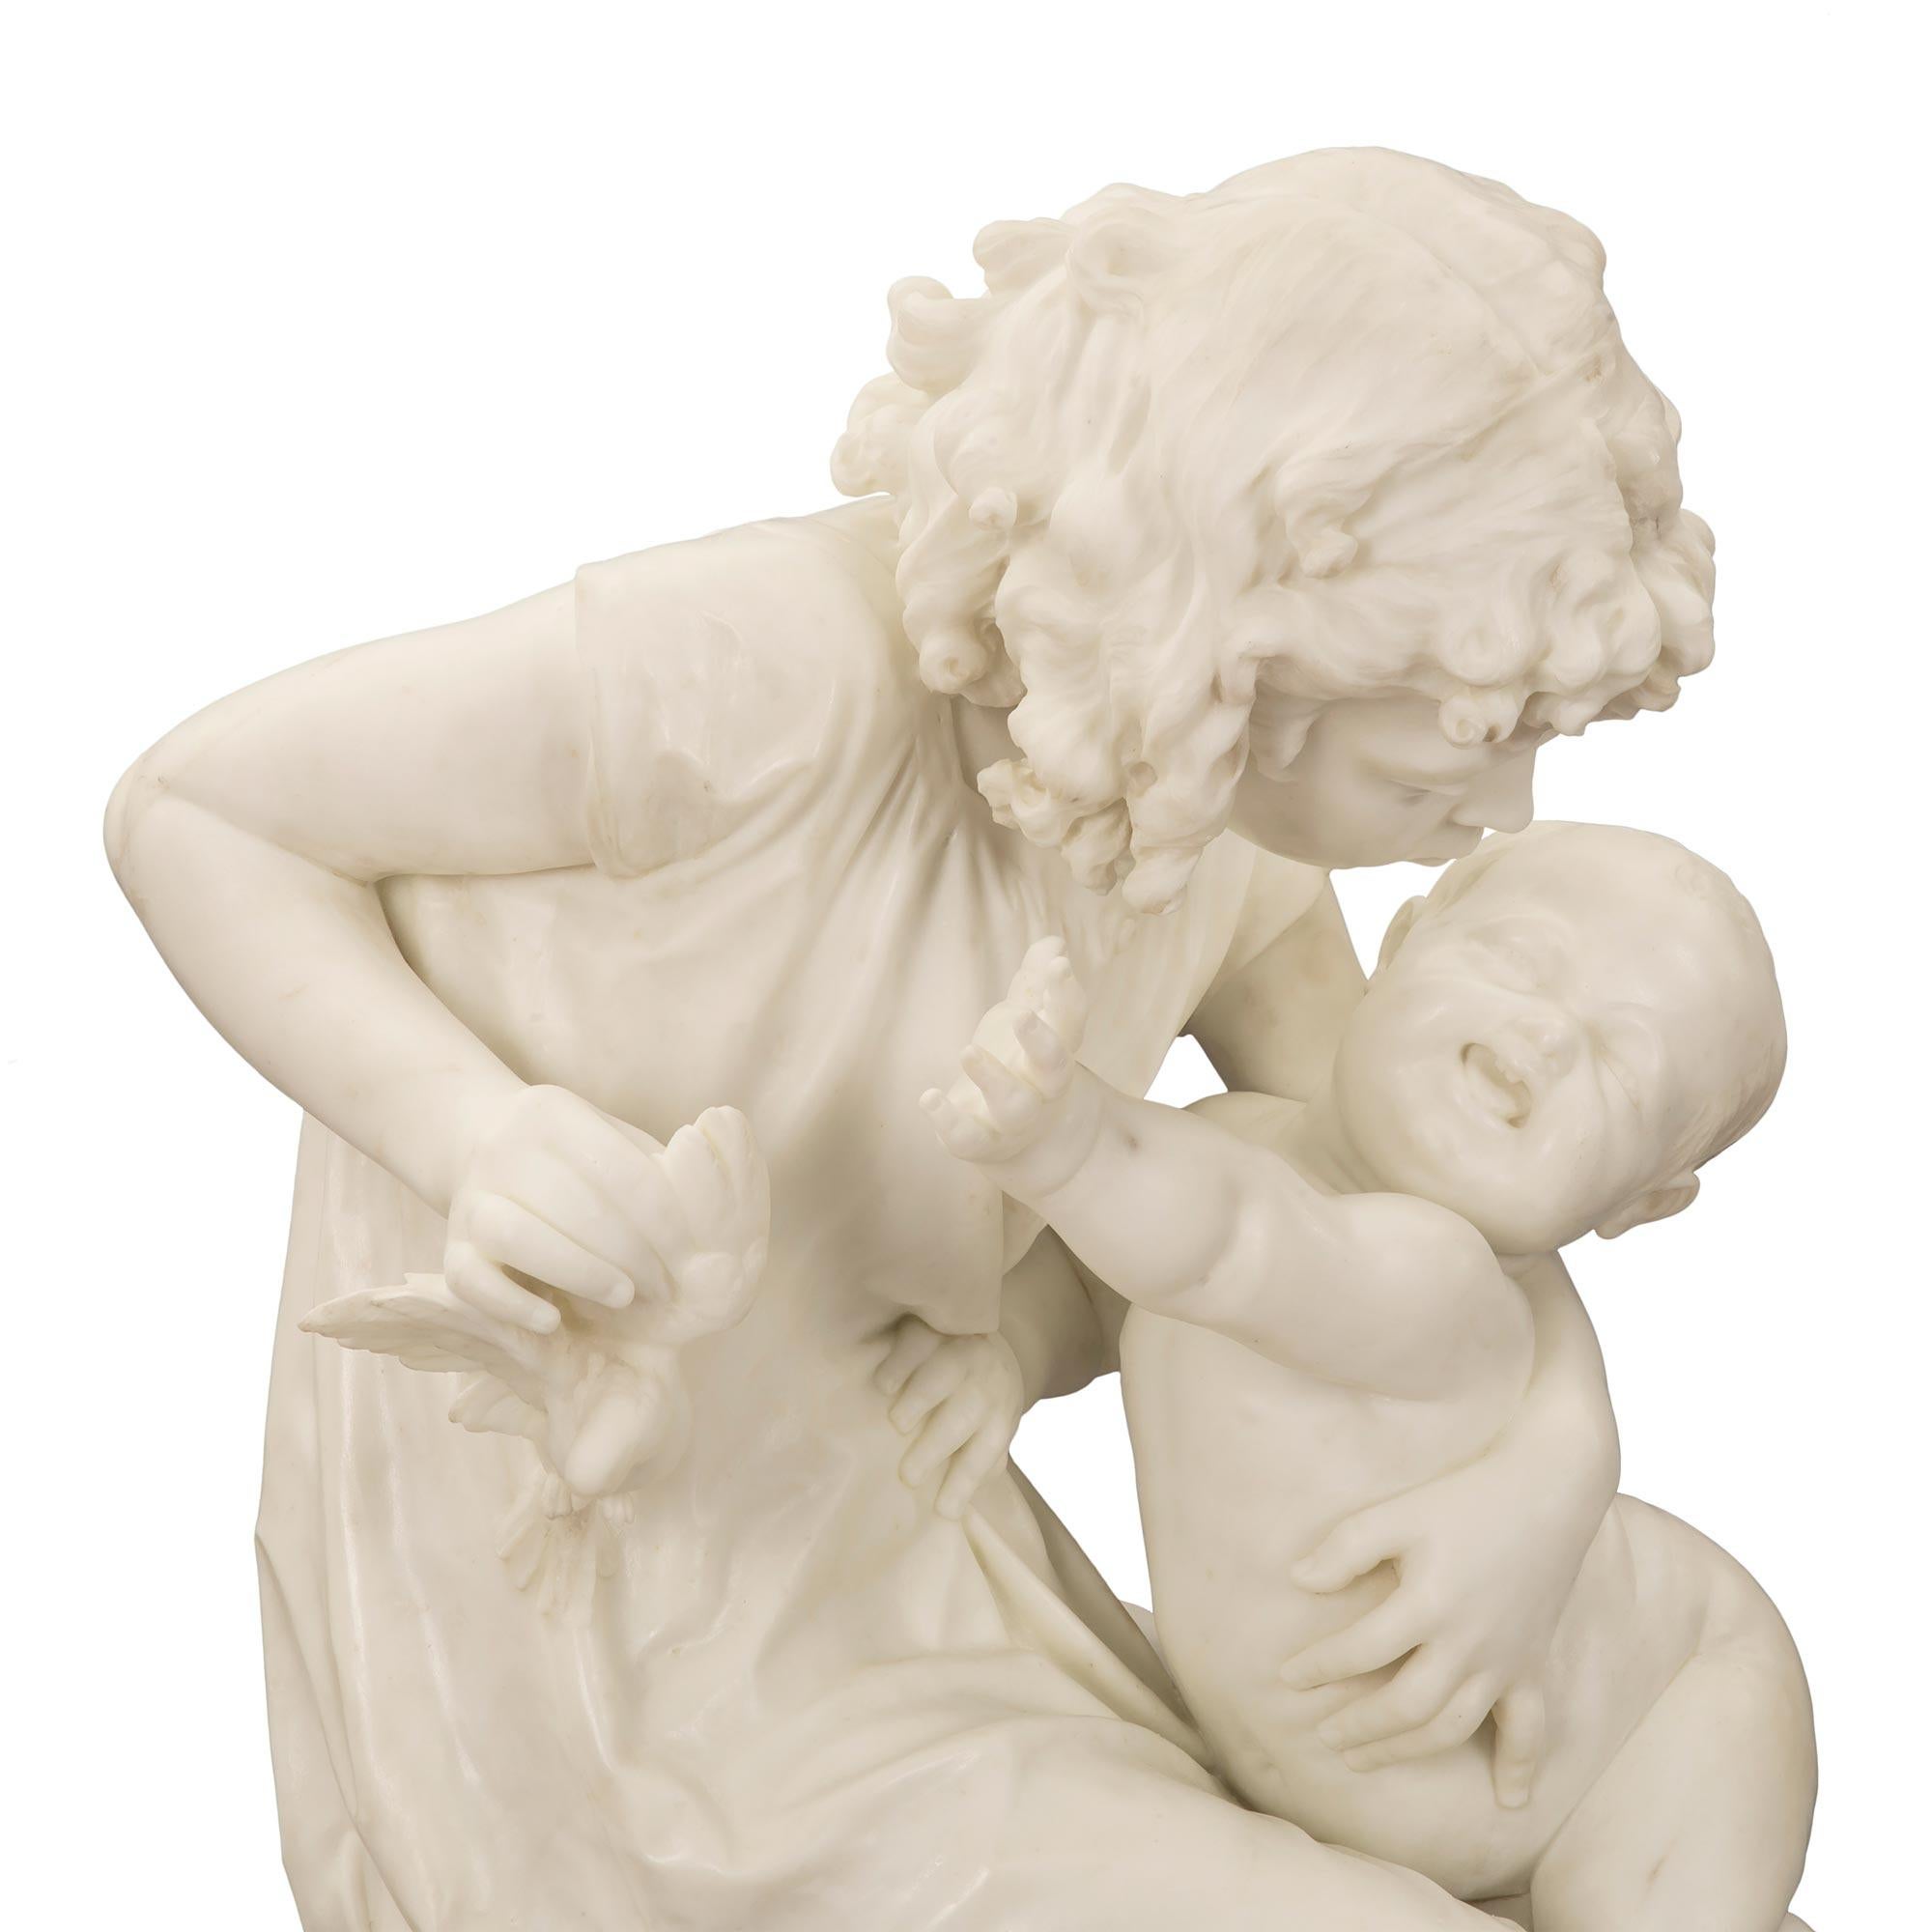 Italian 19th Century White Carrara Marble Statue on Its Original Swivel Pedestal For Sale 3